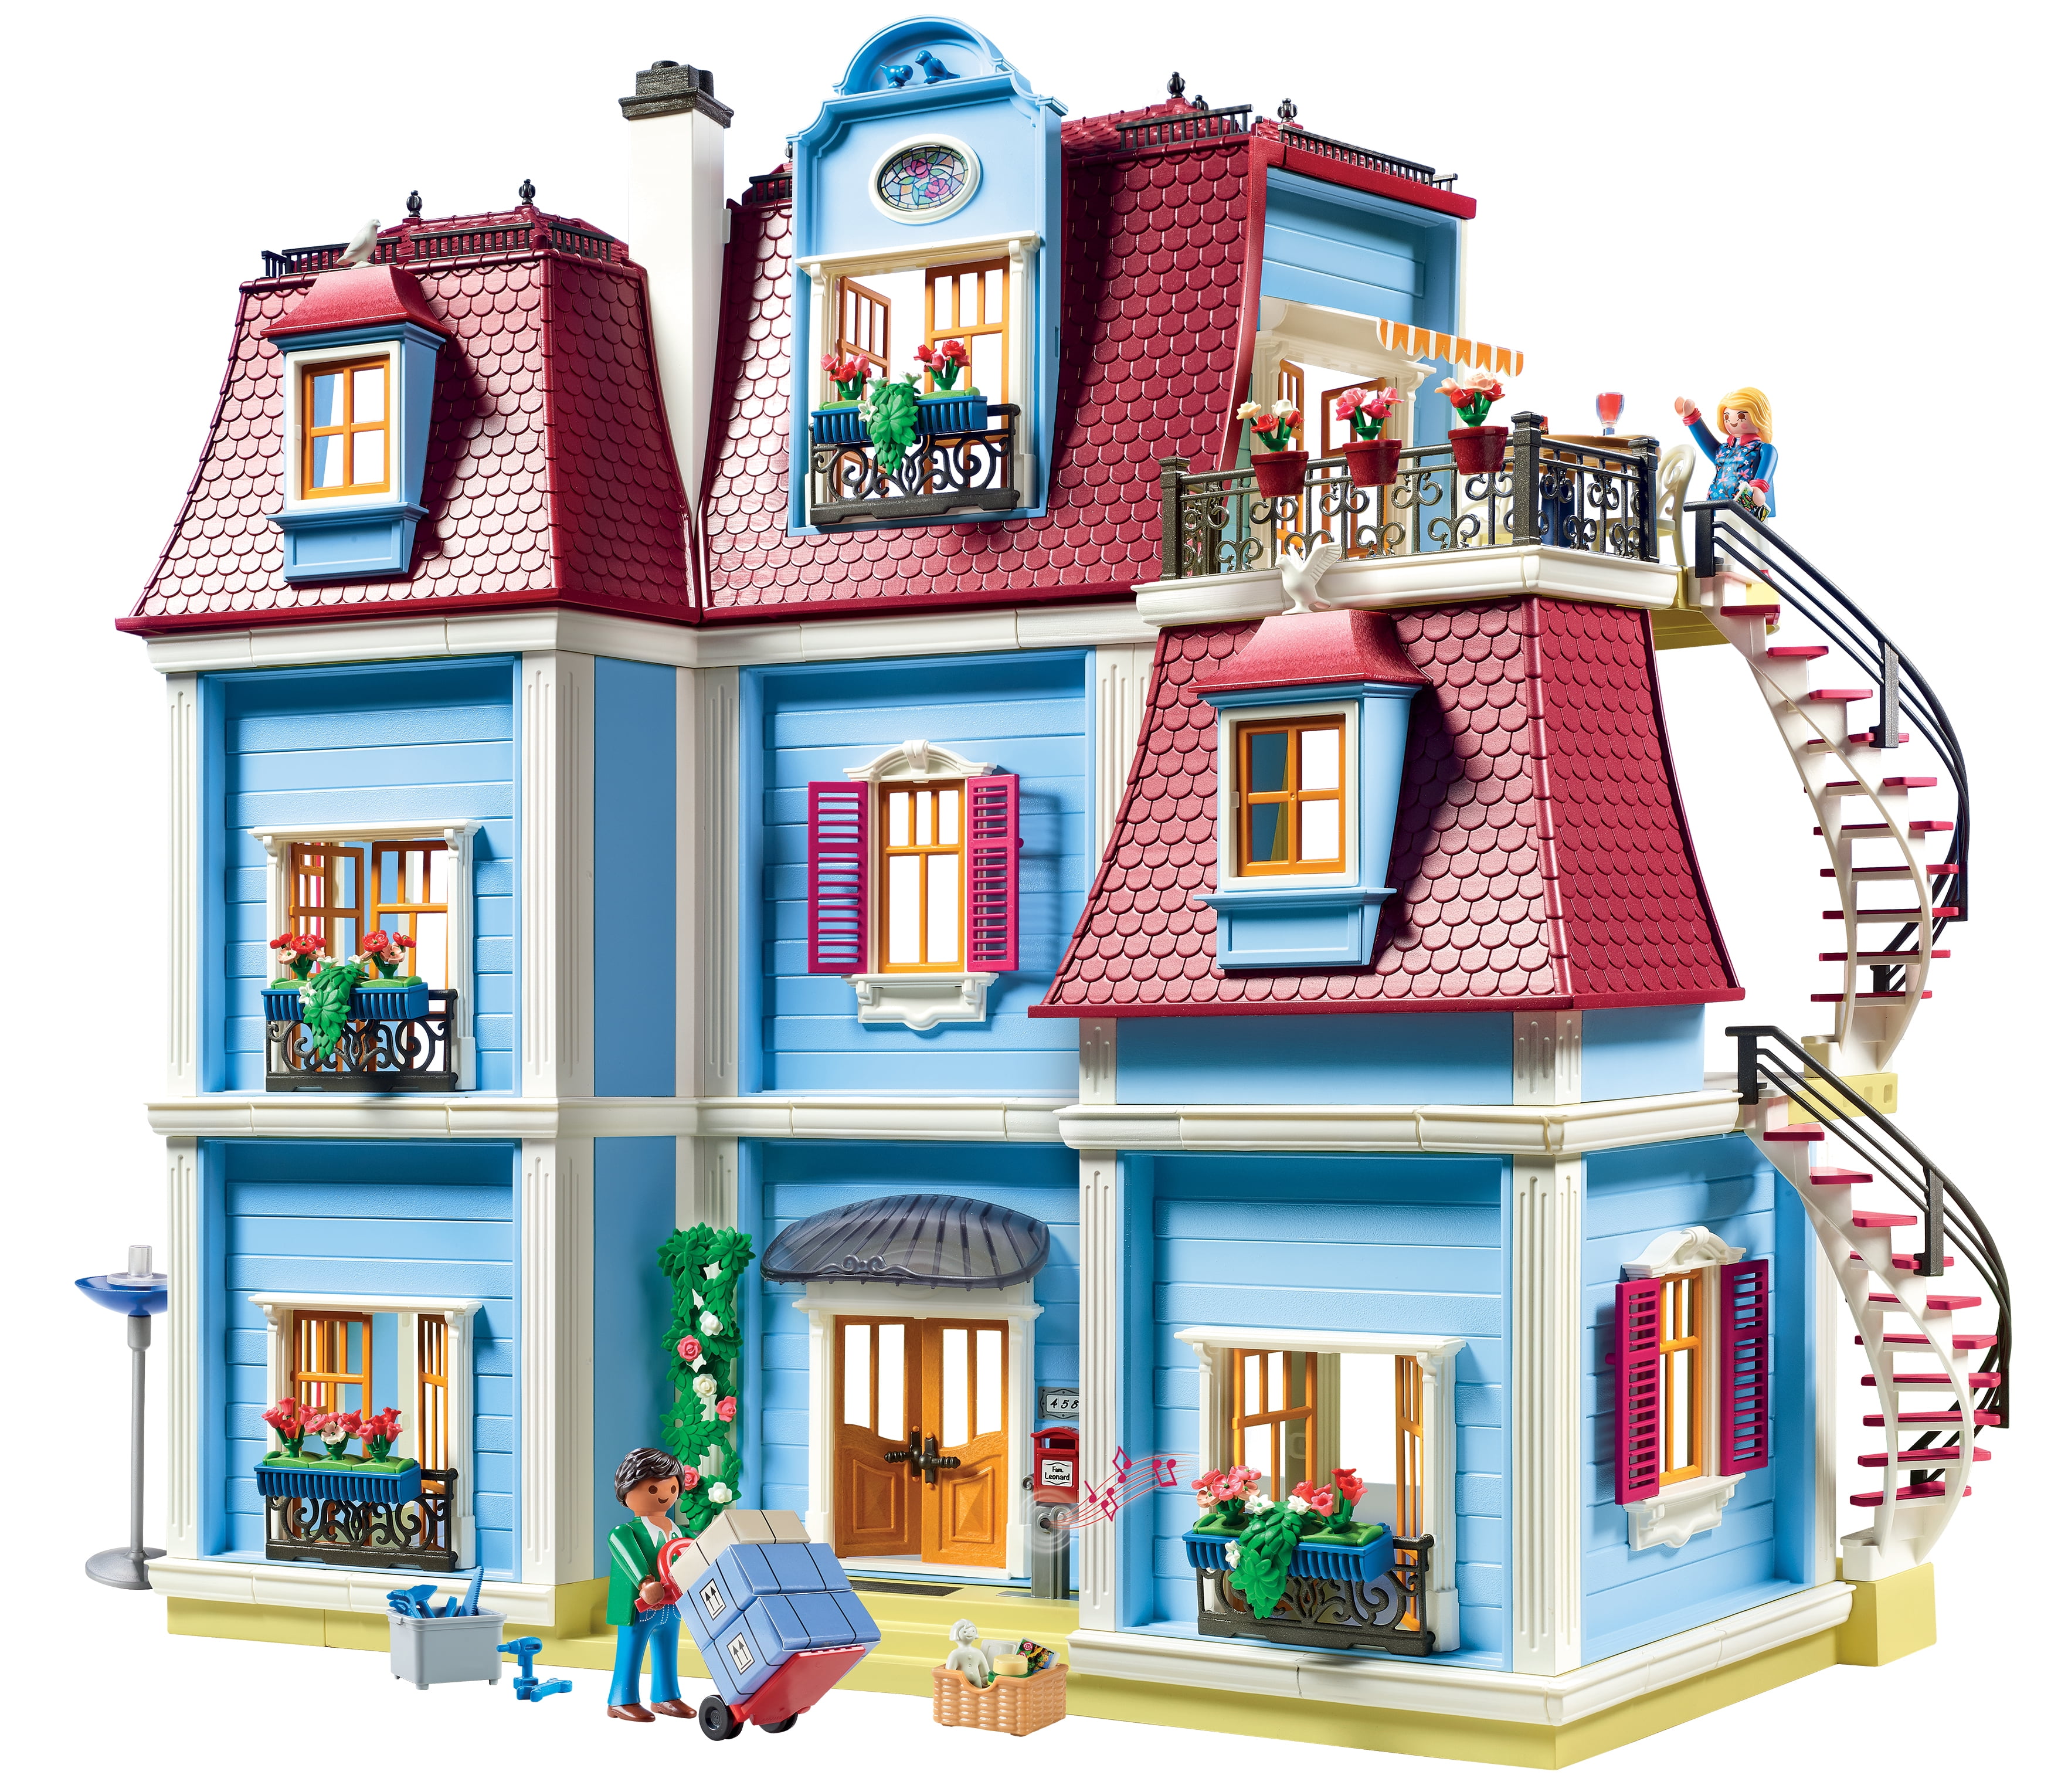 Playmobil SK-1 Ethnic Woman Figure City Life School Holiday Dollhouse 